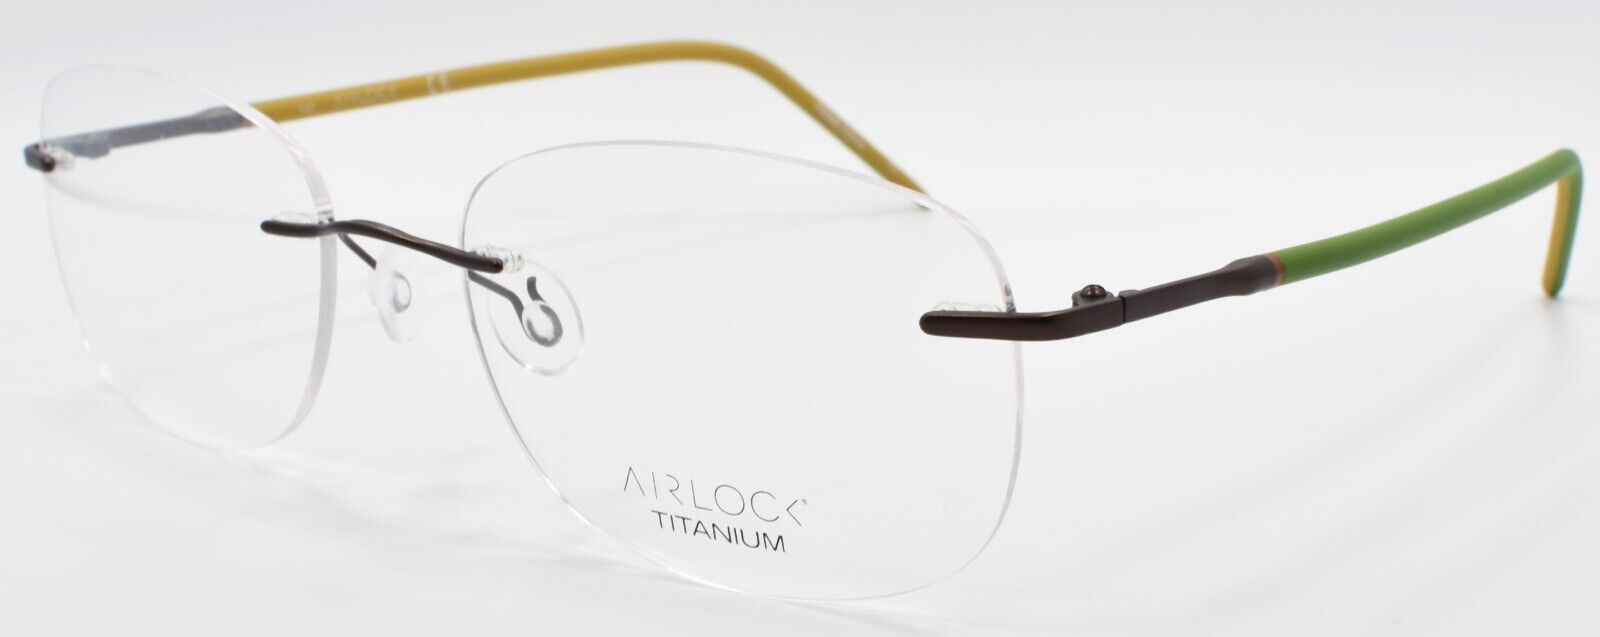 1-Airlock Endless 206 301 Men's Eyeglasses Frames Rimless 53-18-140 Dark Olive-886895316491-IKSpecs